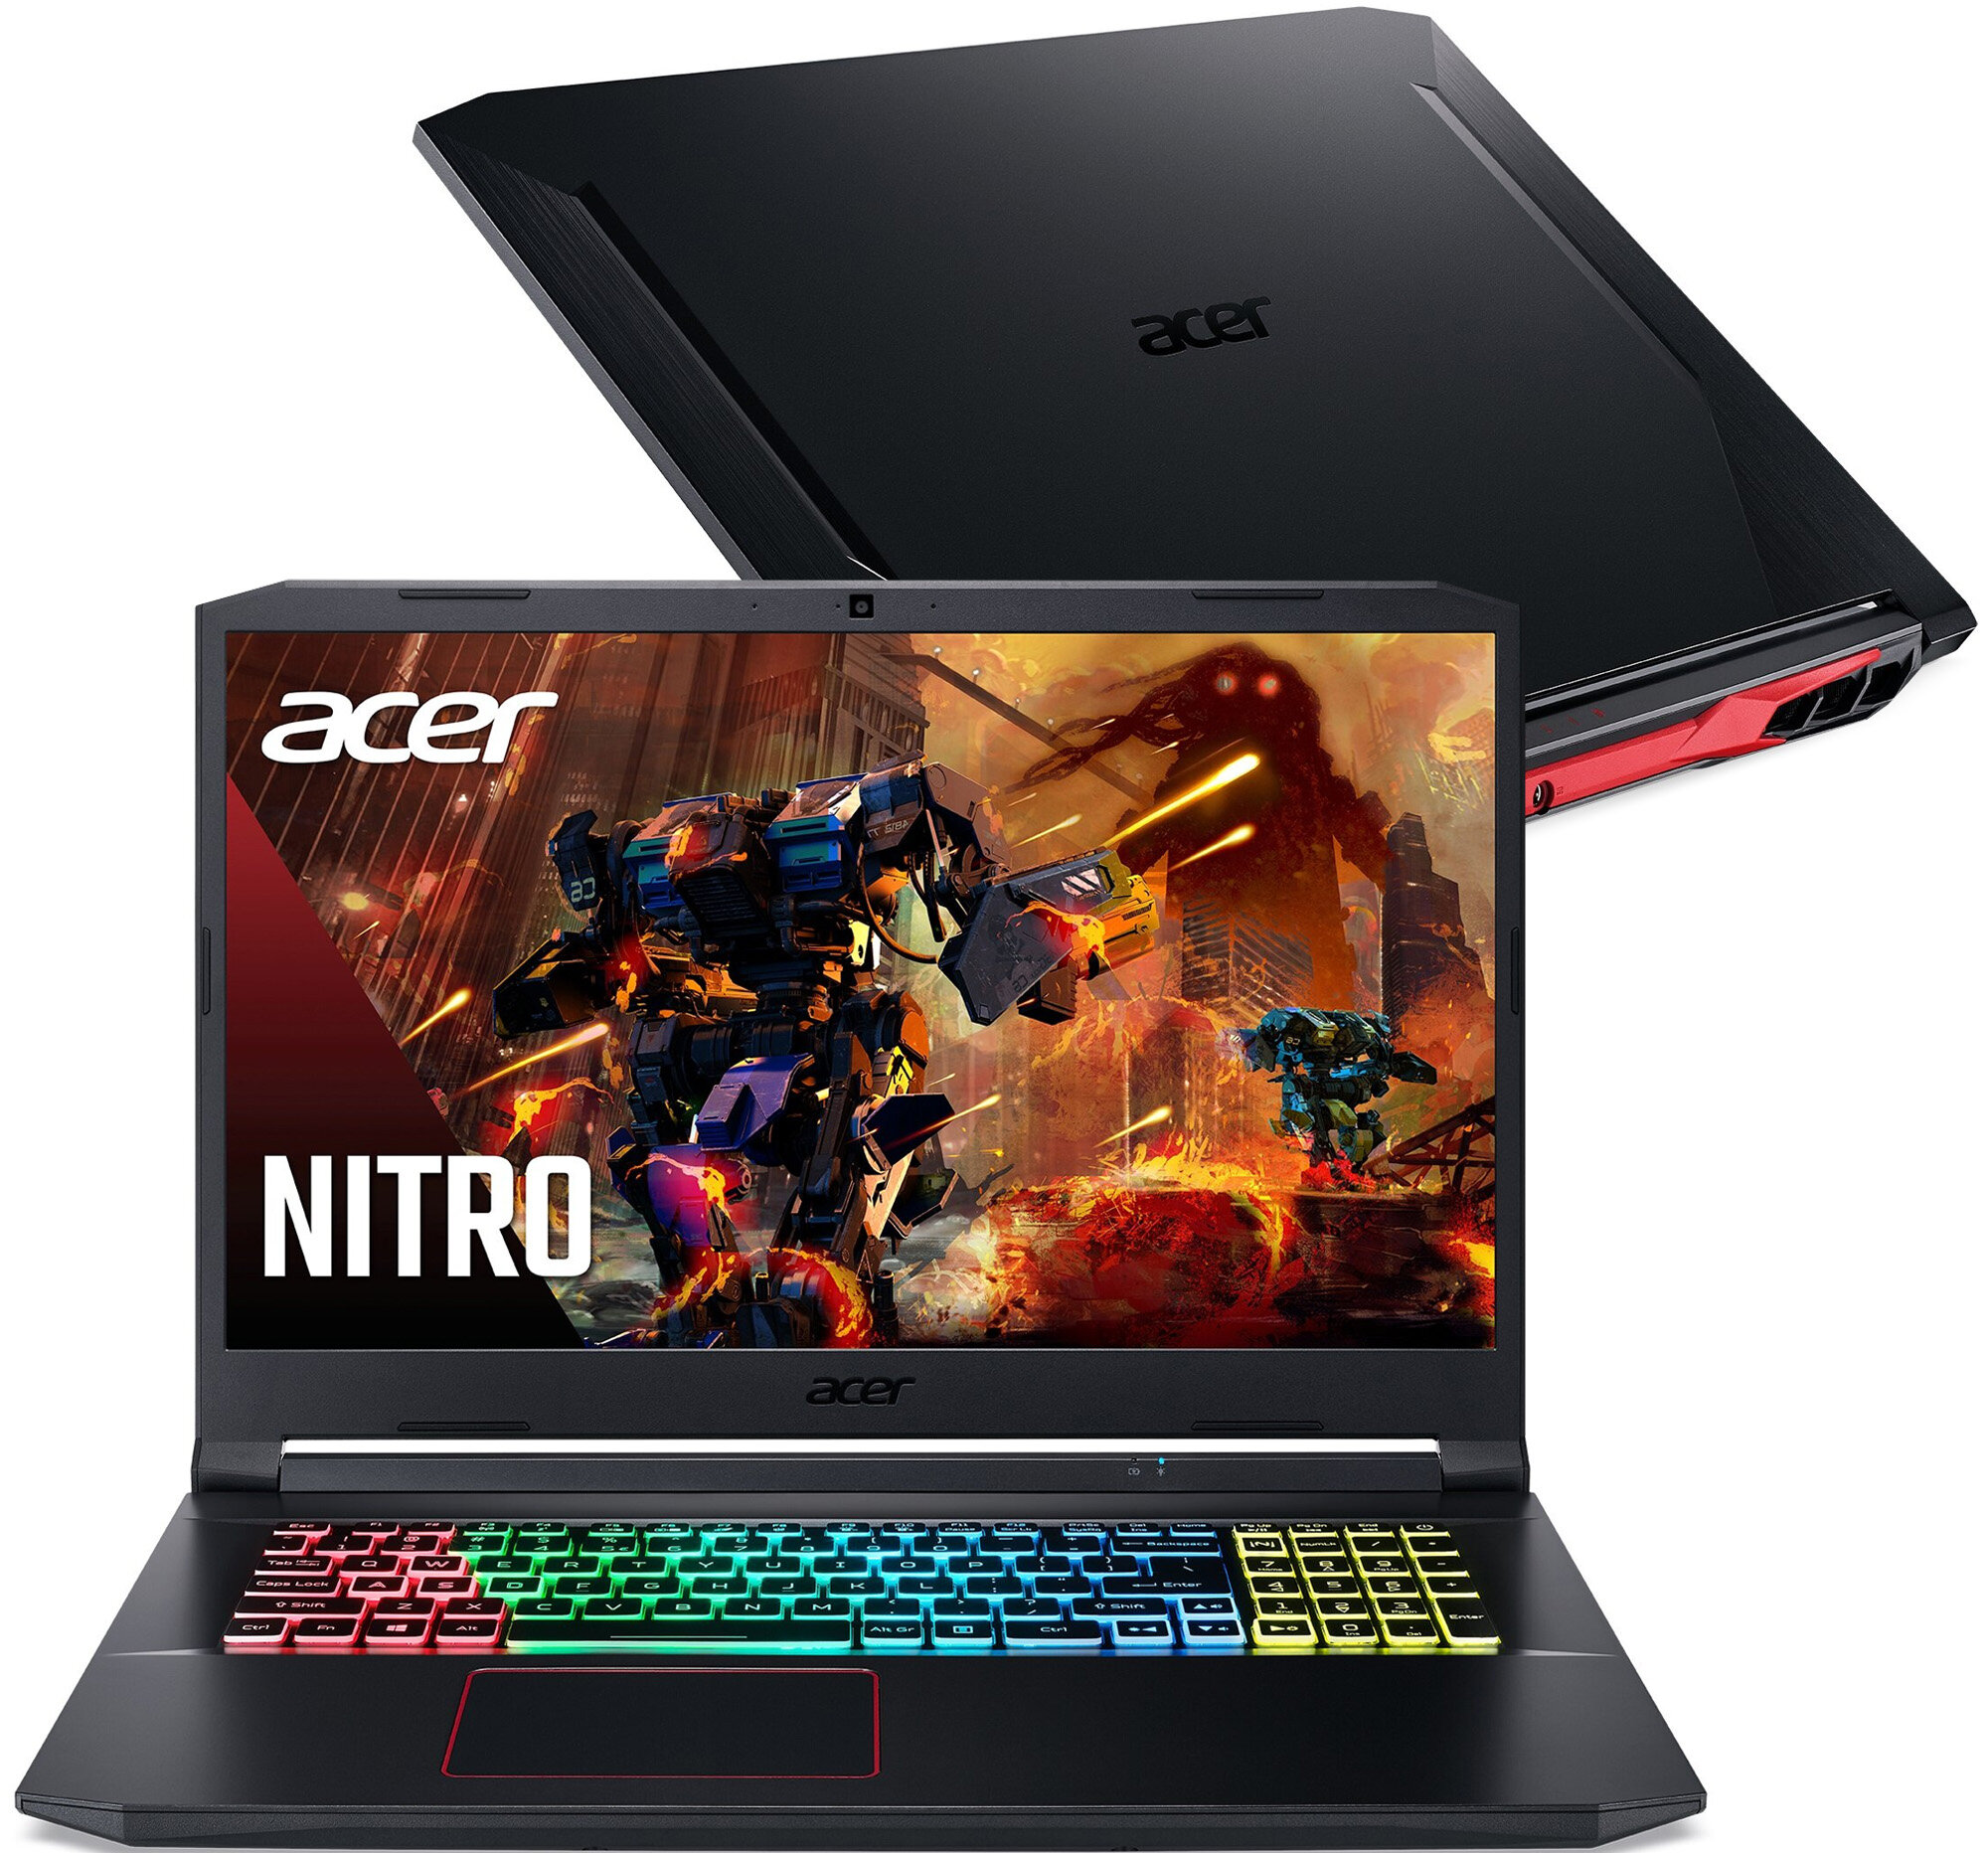 Laptop ACER Nitro 5 AN515-55-538D